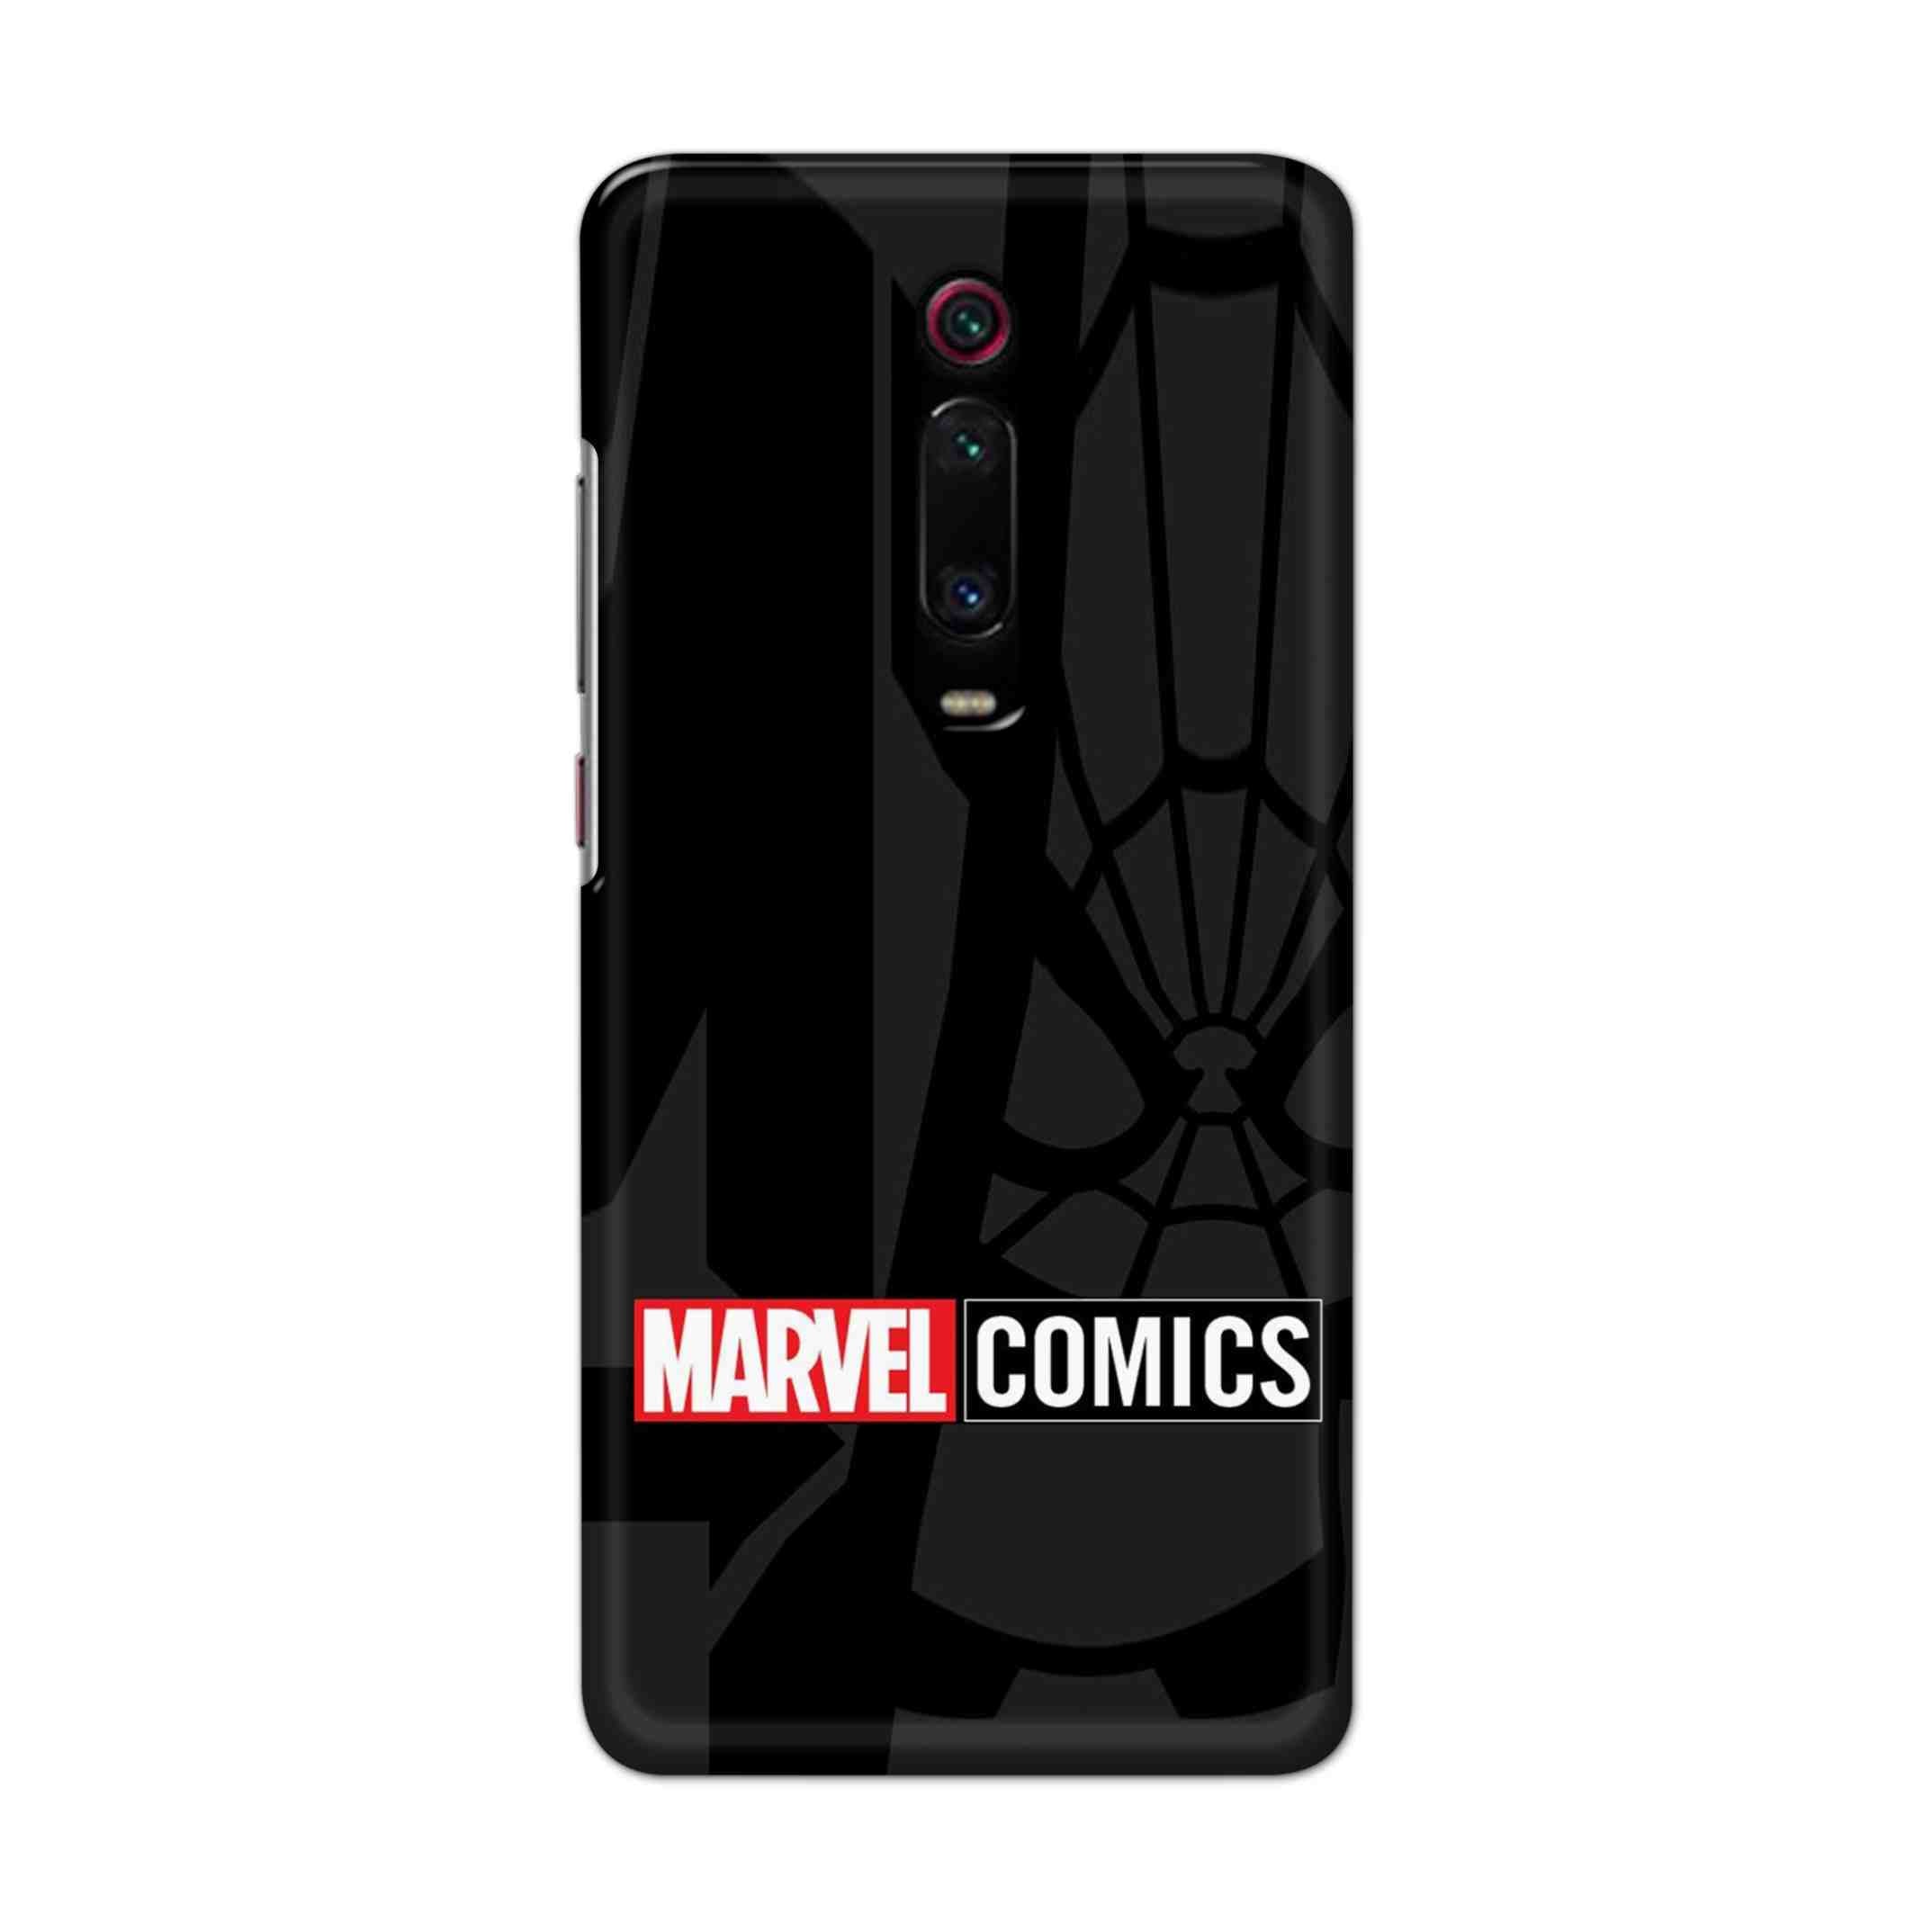 Buy Marvel Comics Hard Back Mobile Phone Case Cover For Xiaomi Redmi K20 Online